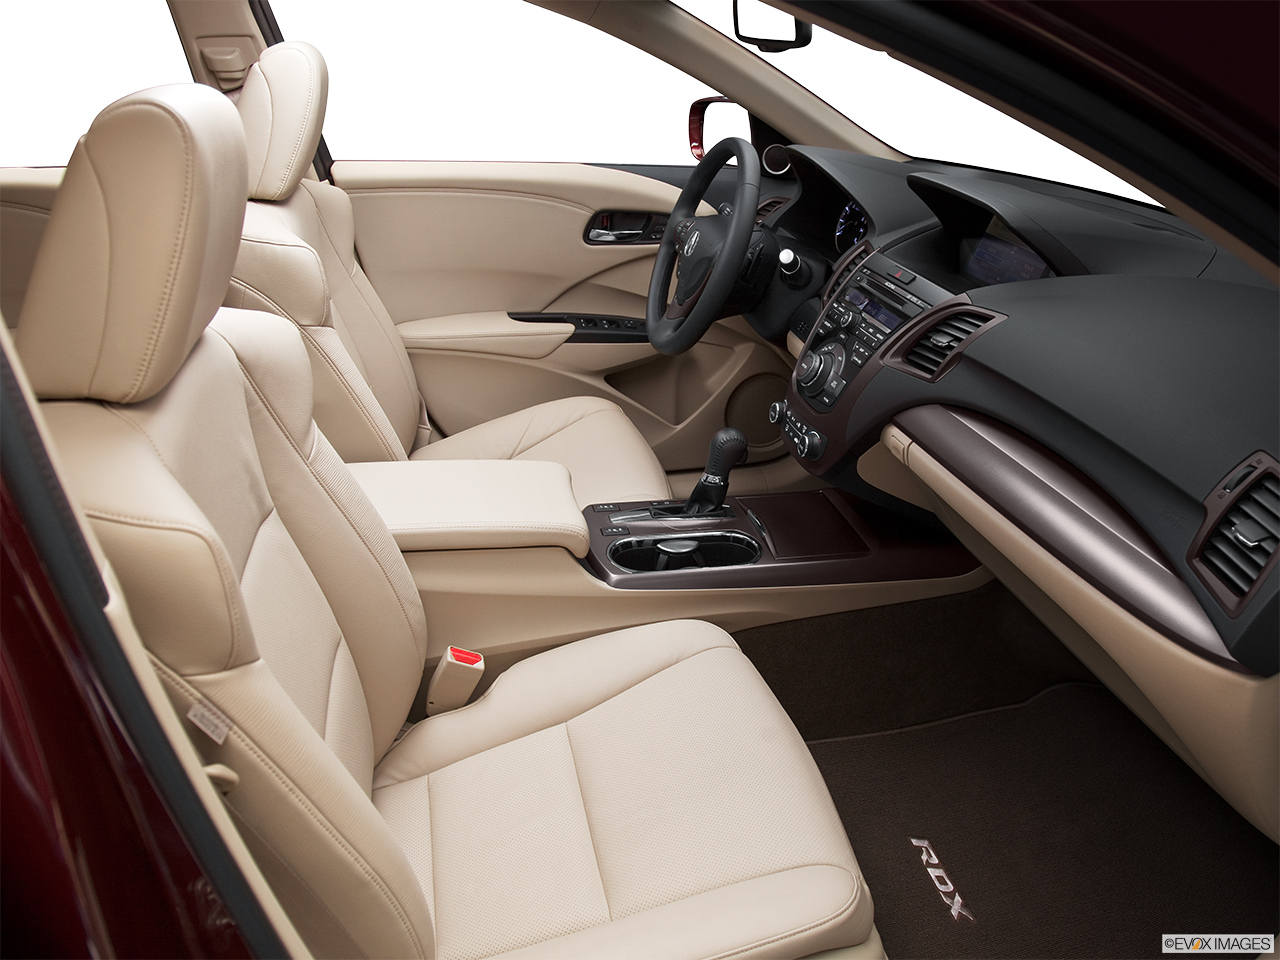 2013 Acura RDX AWD Passenger seat. 